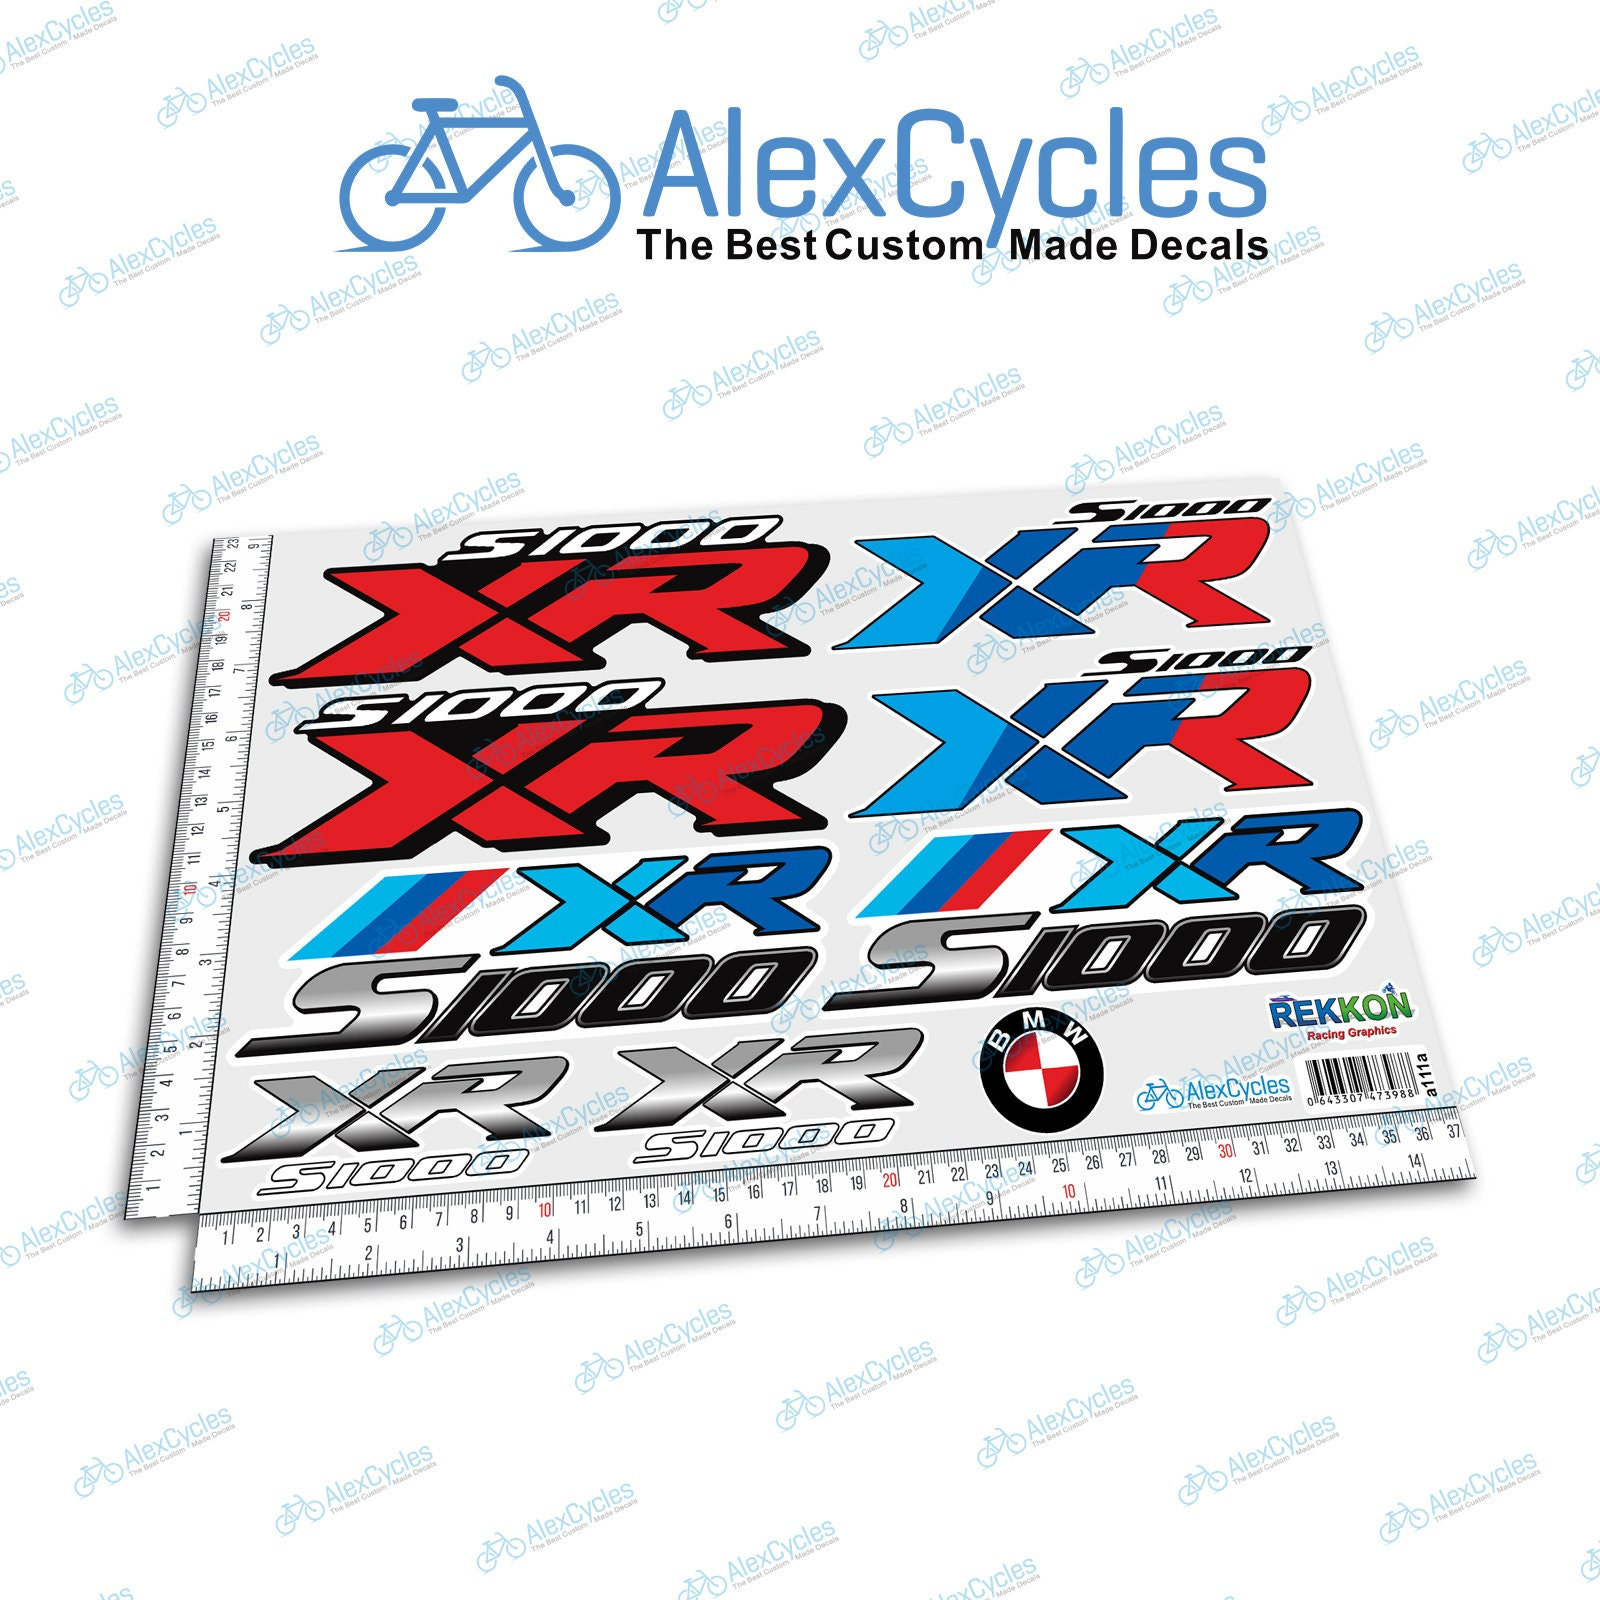 BMW Motorrad S1000XR 2 parts motorcycle bike sticker set 34 pcs